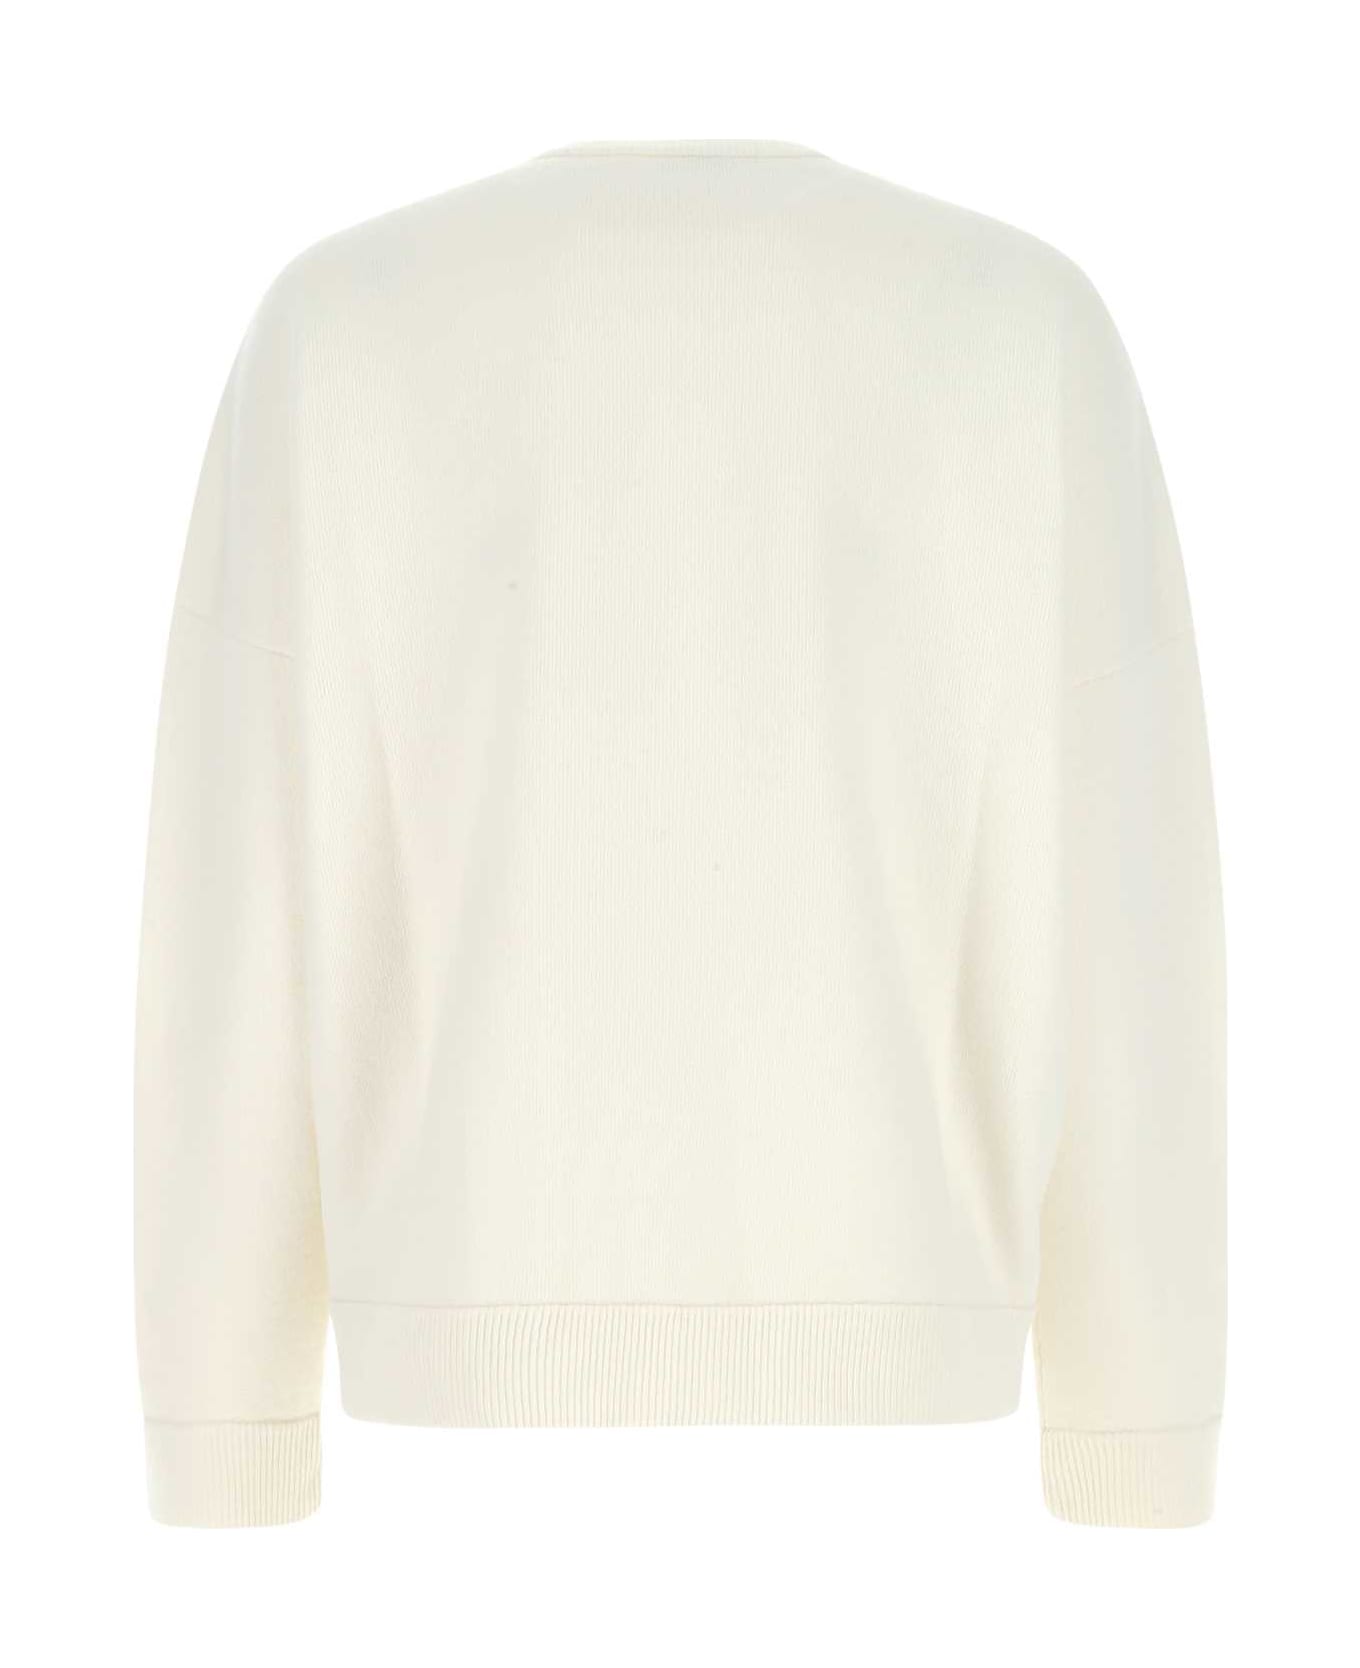 Loewe Ivory Cashmere Blend Oversize Sweater - SOFTWHITE